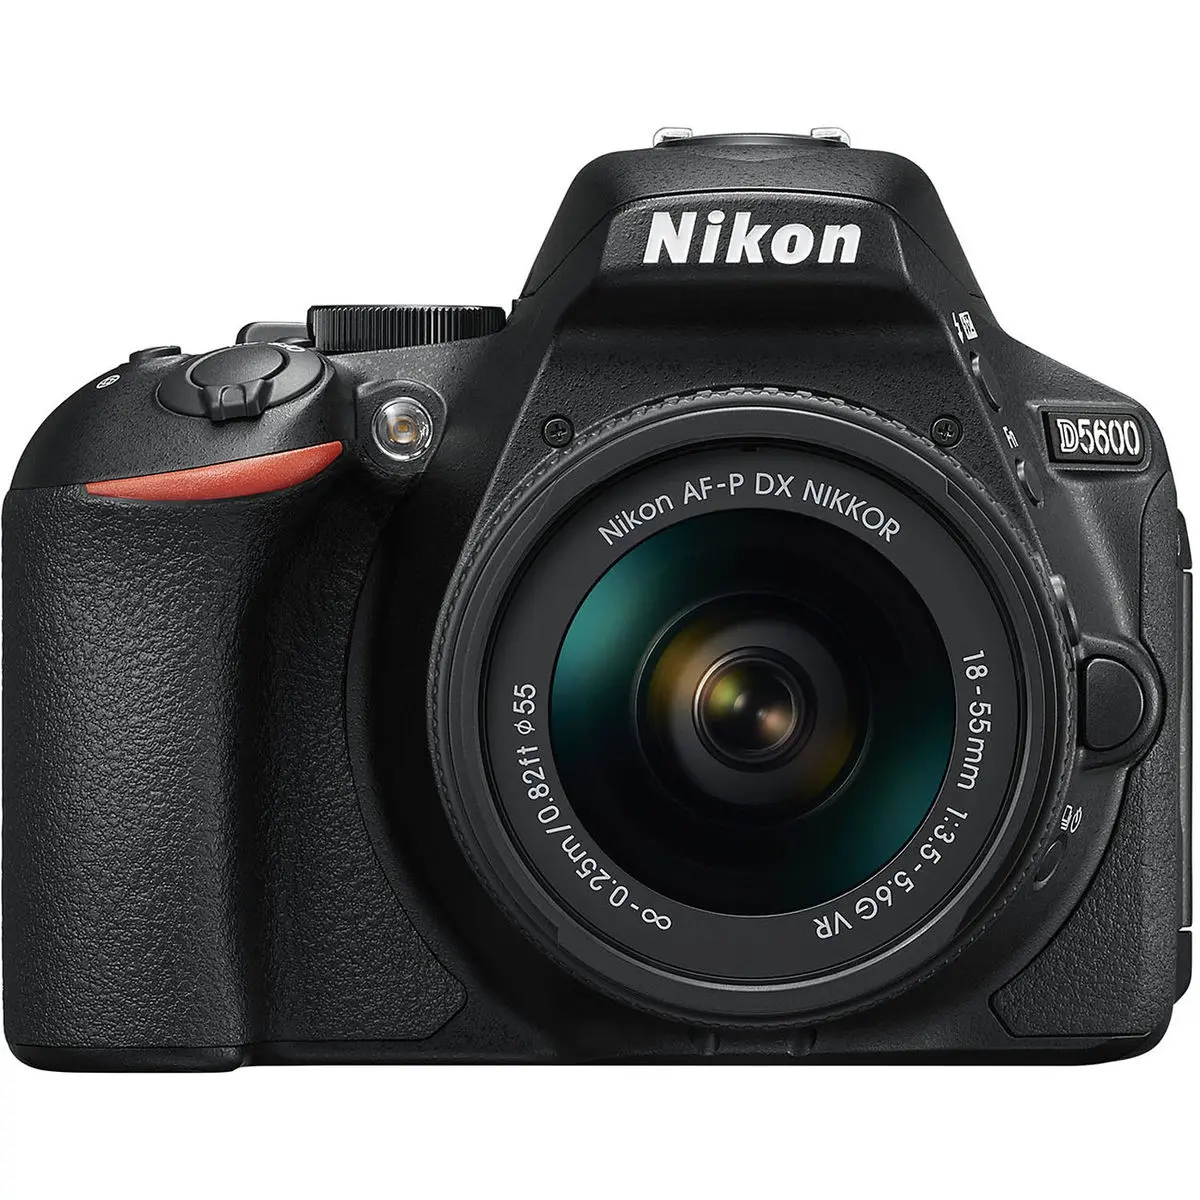 2. Nikon D5600 AF-P 18-55 VR Kit WiFi NFC FullHD 24.2MP Camera Black